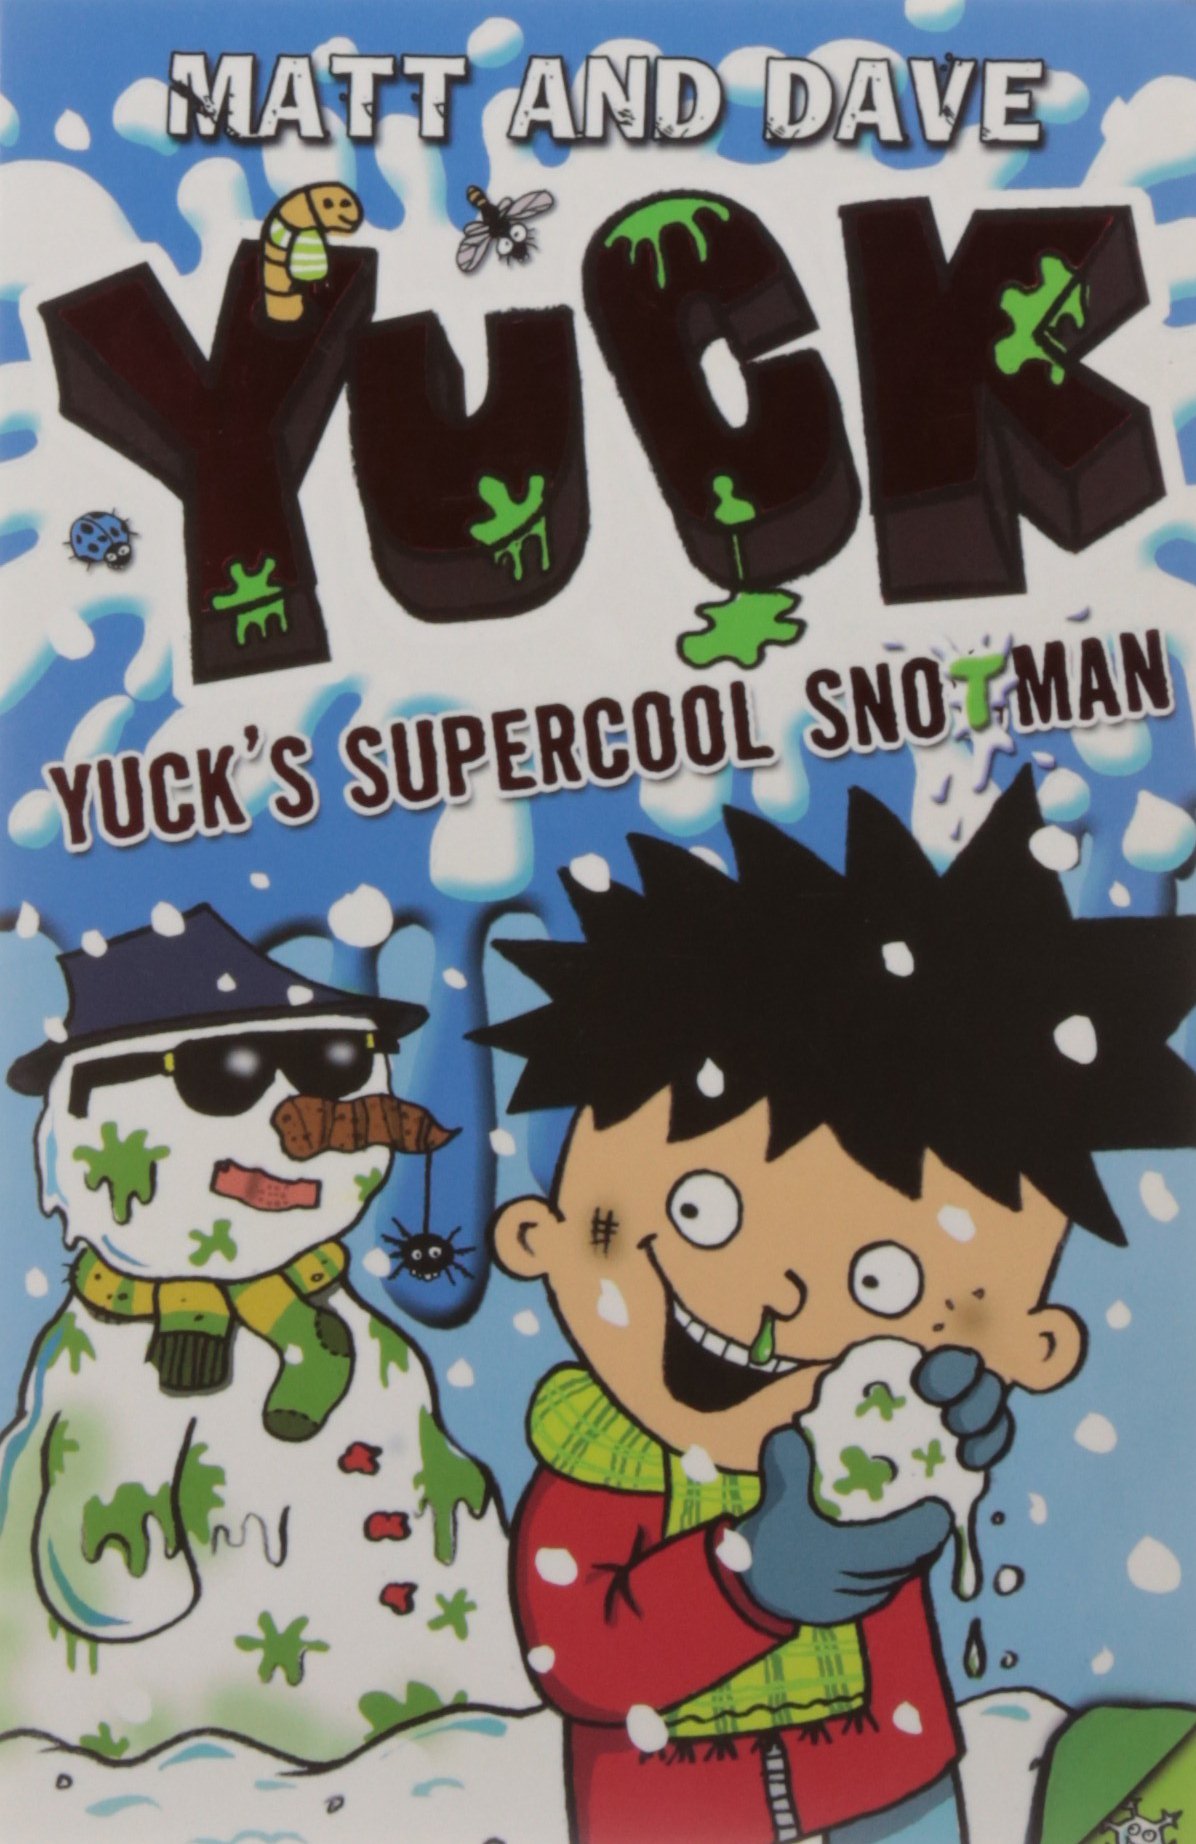 Yuck's supercool snotman